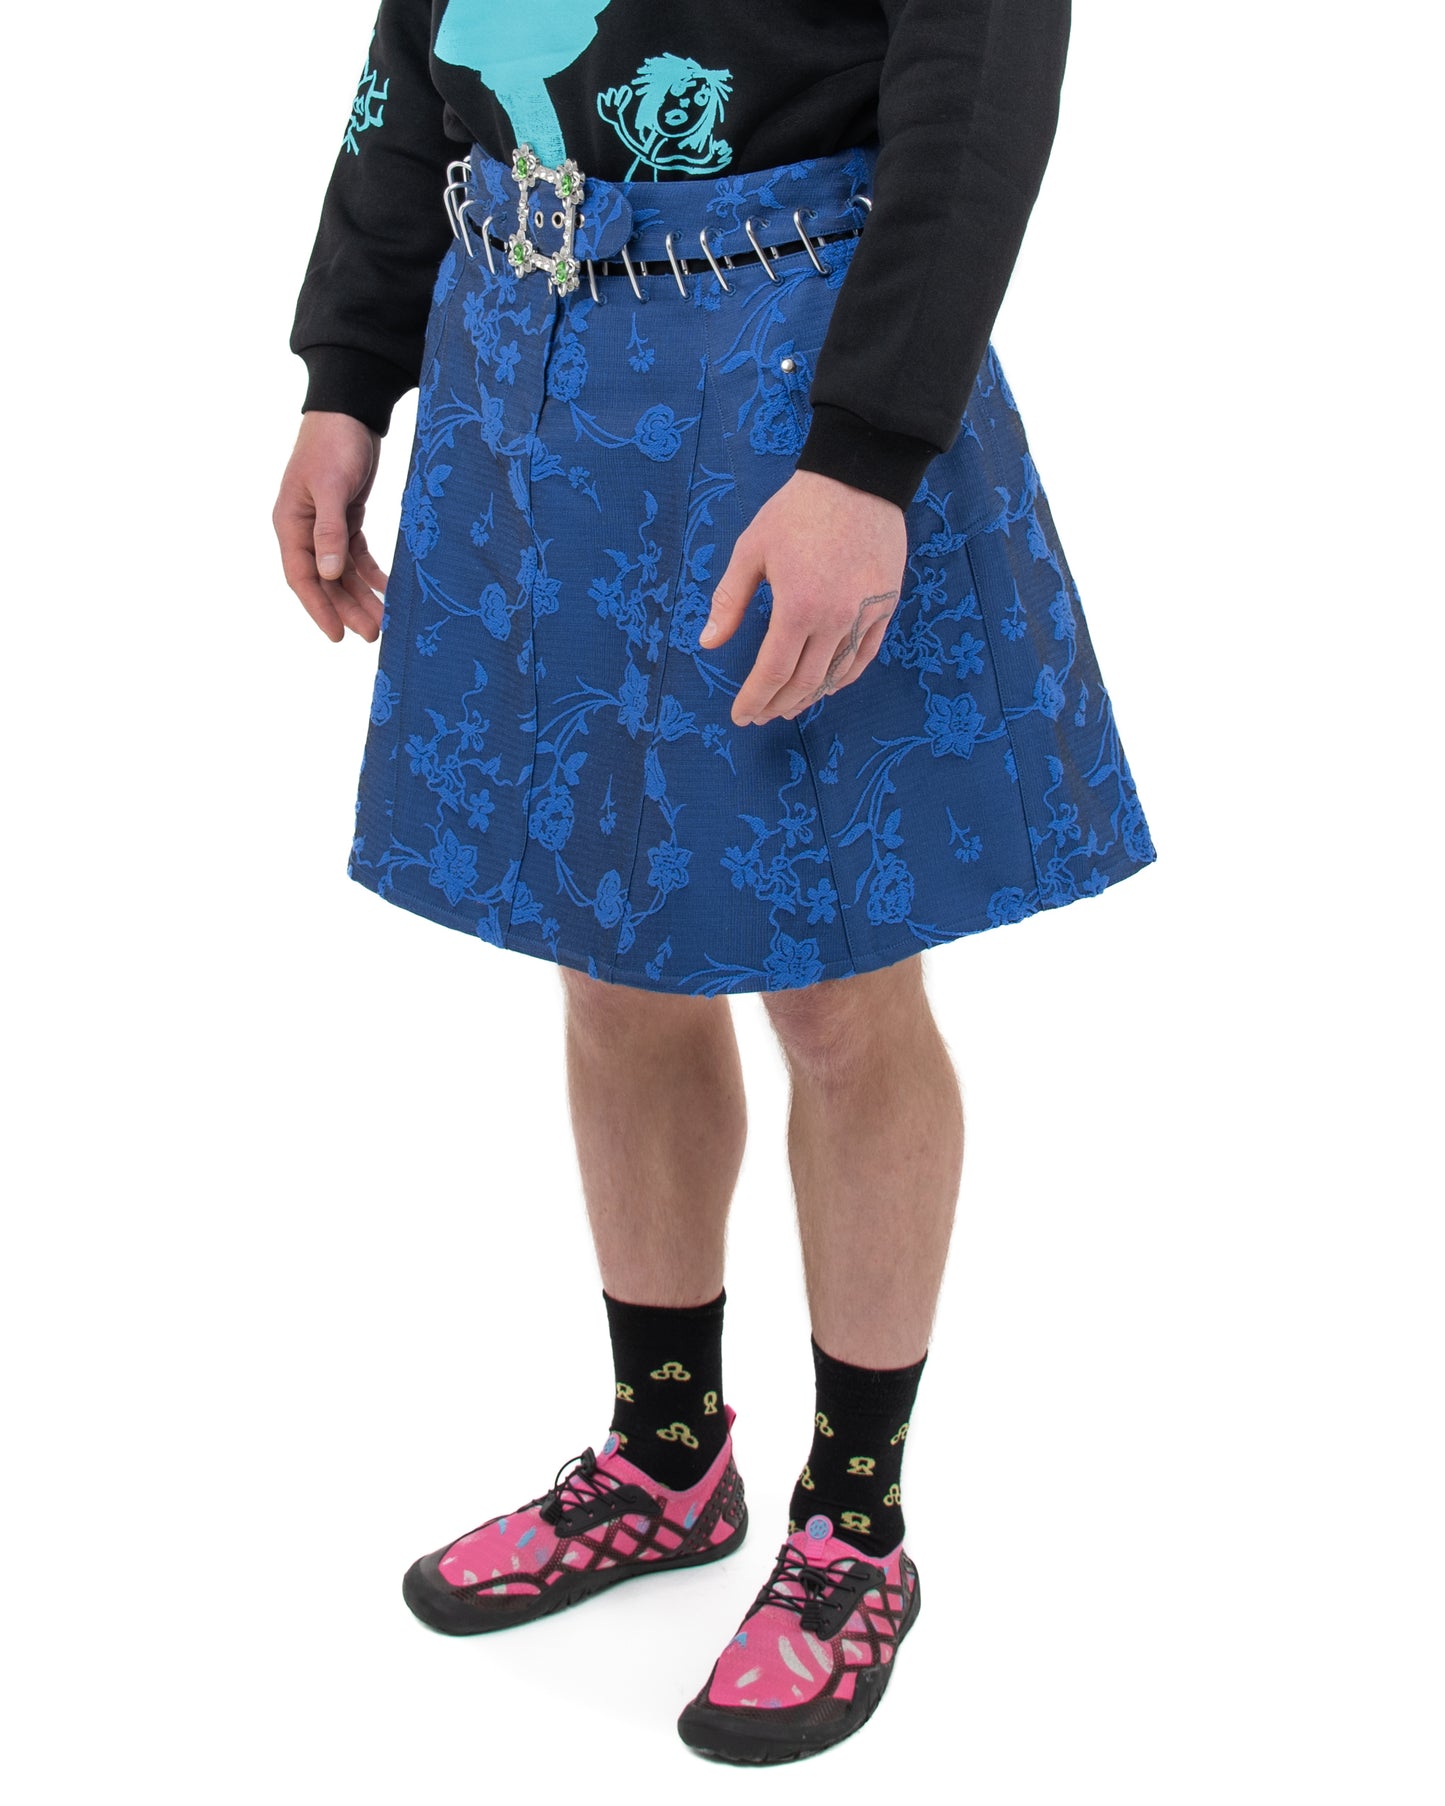 Mallow Carabiner Skirt